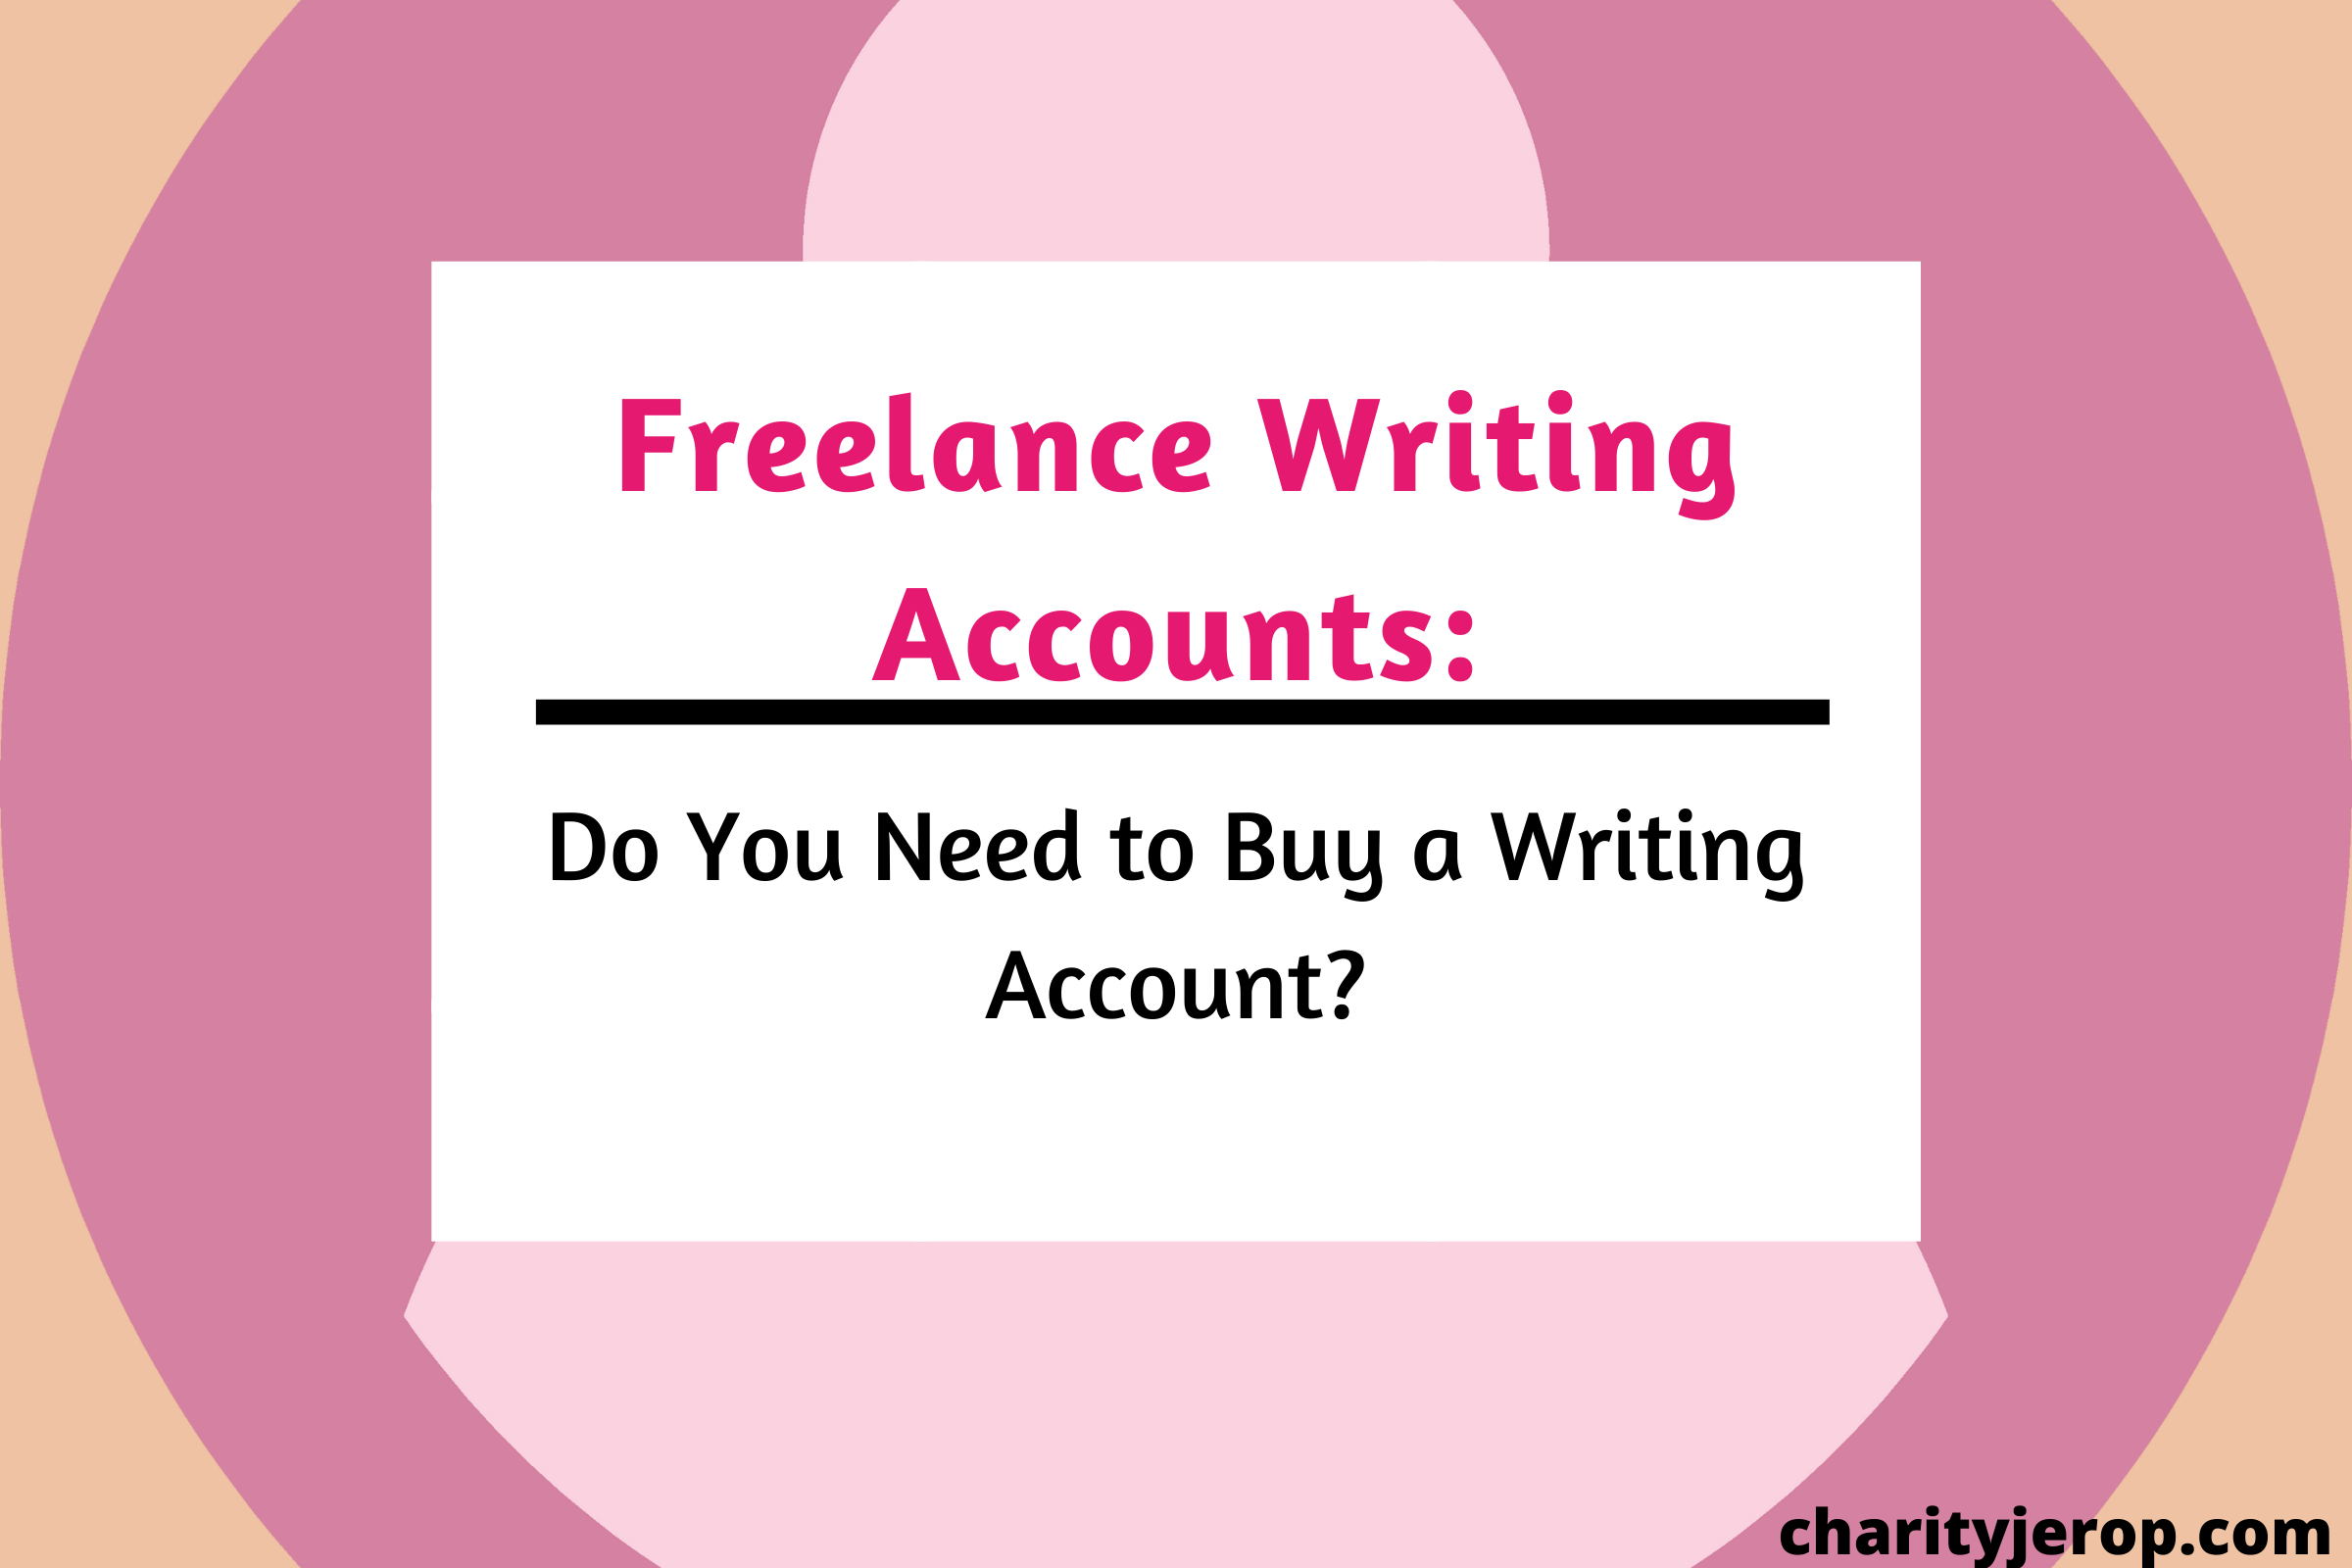 Freelance writing accounts